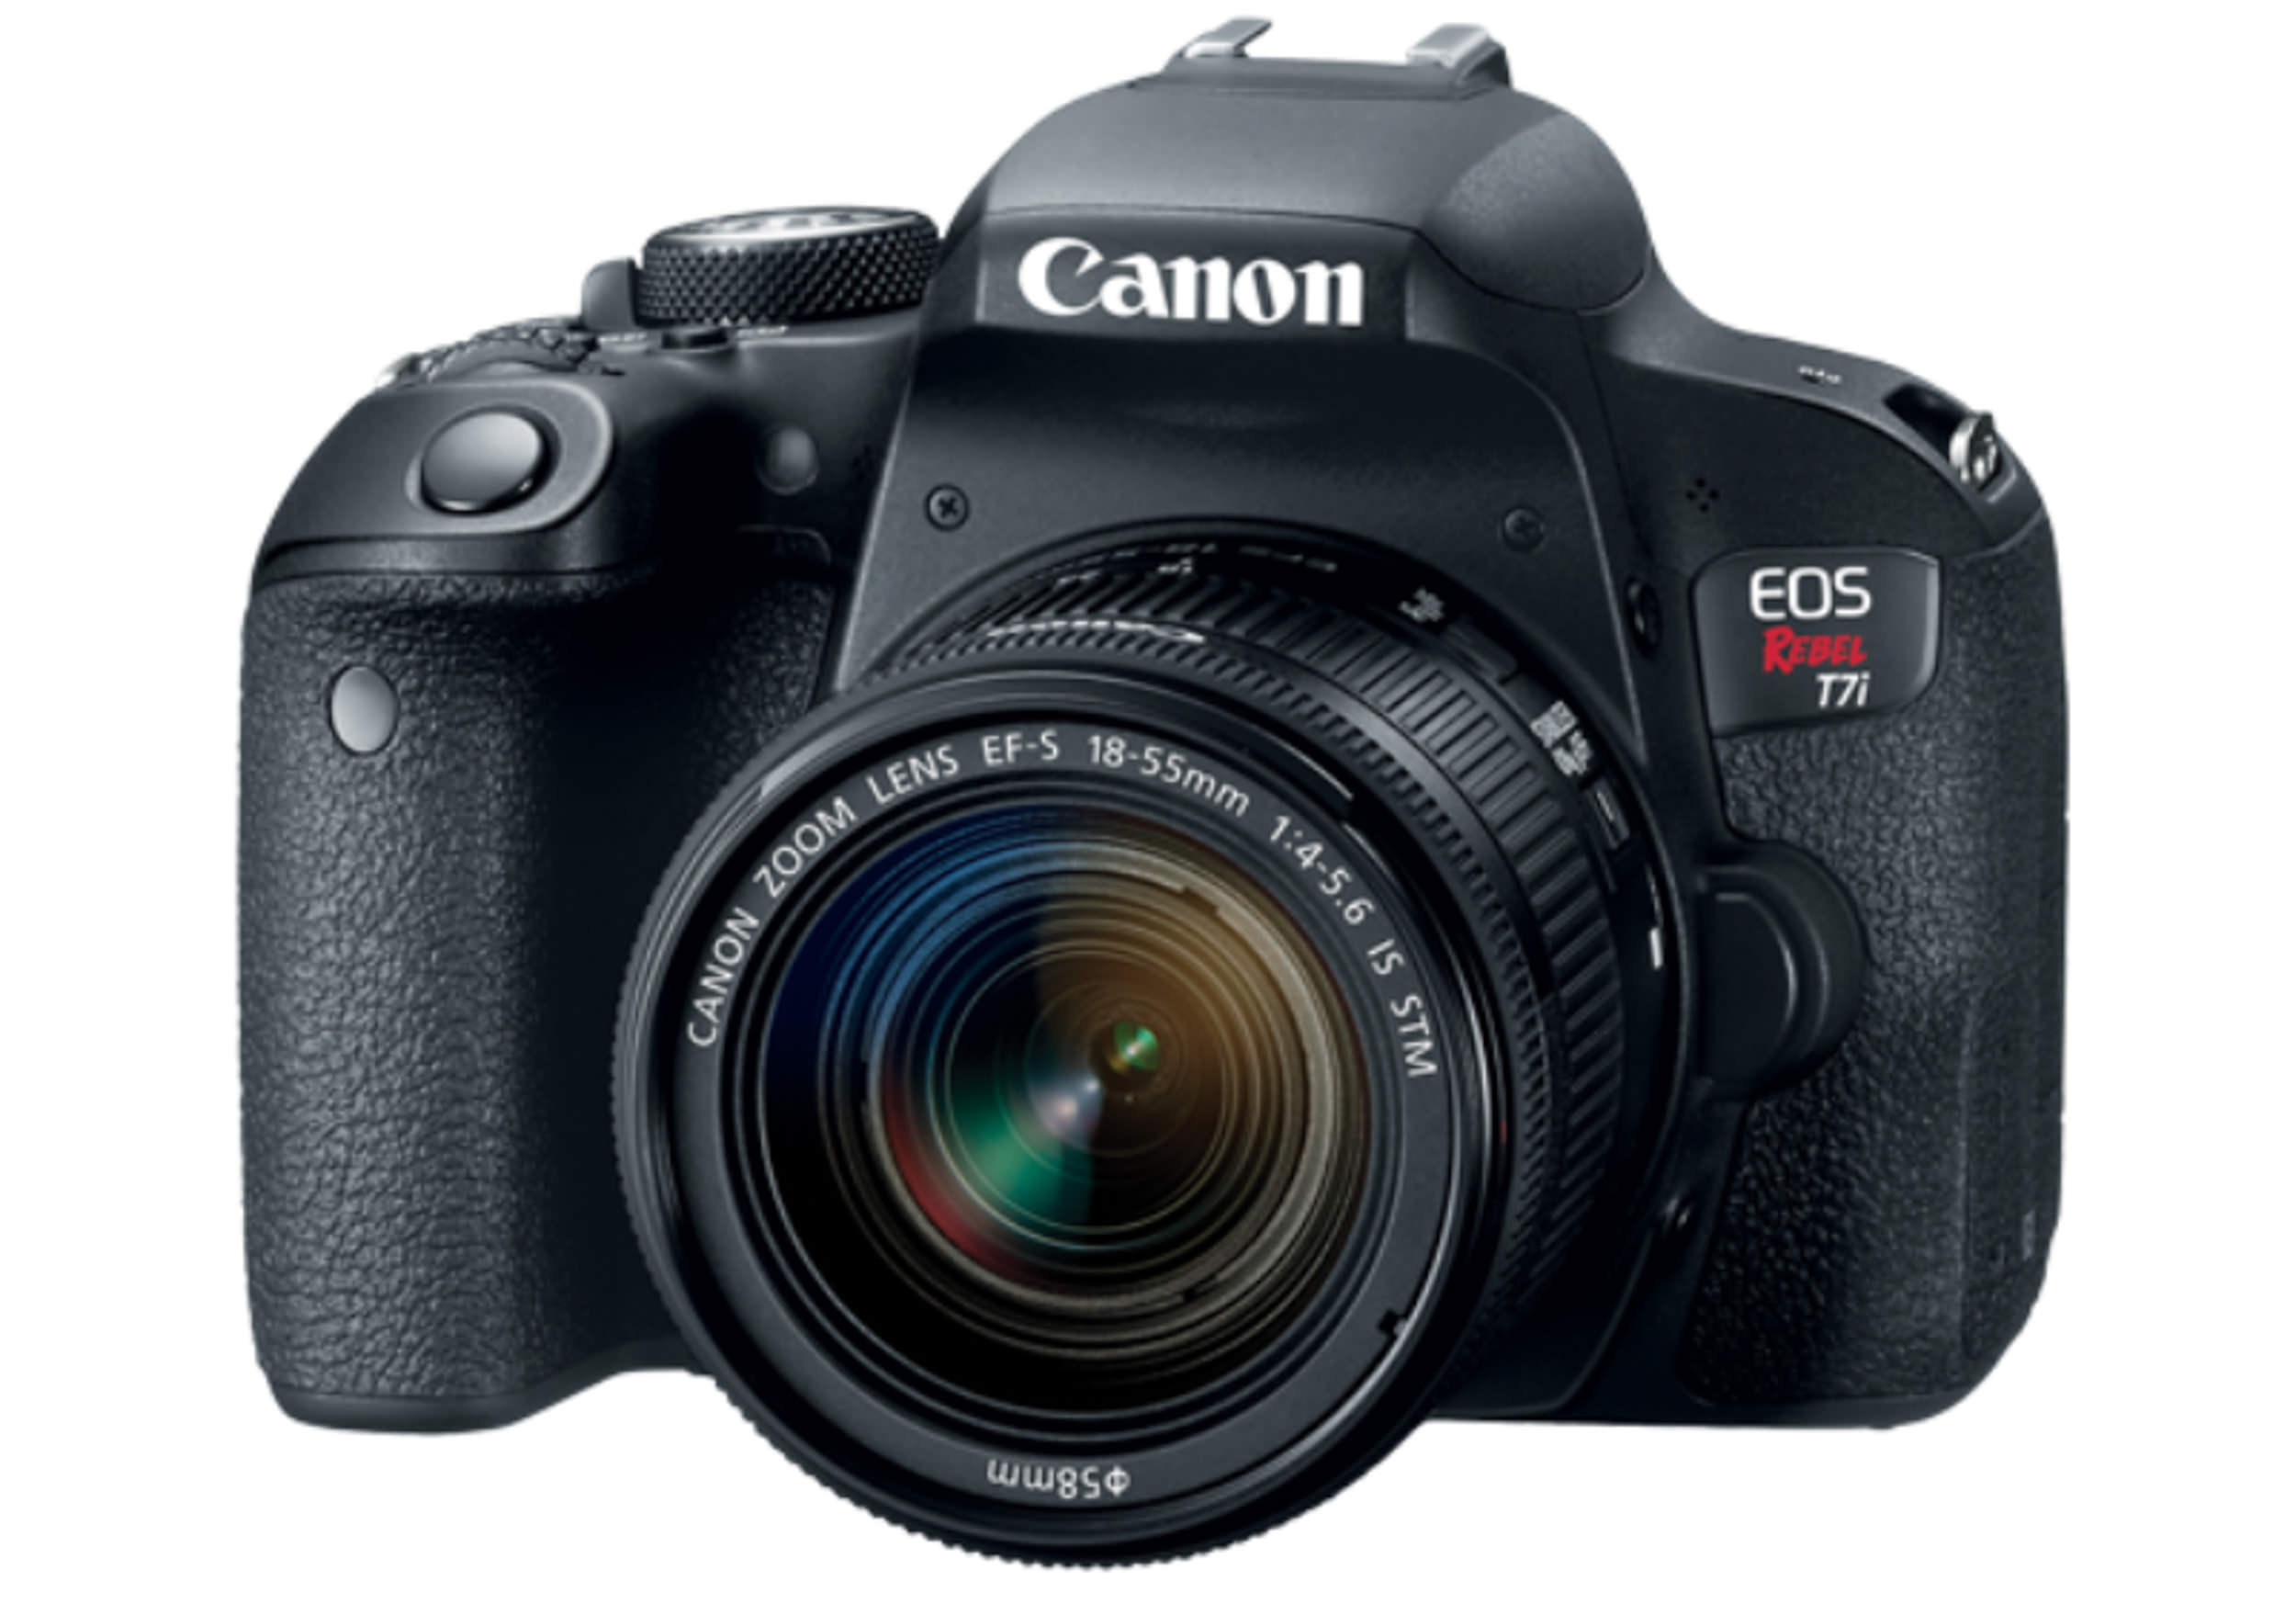 Canon Announces 2 New DSLRs & More | The Rebel T7I & EOS 77D